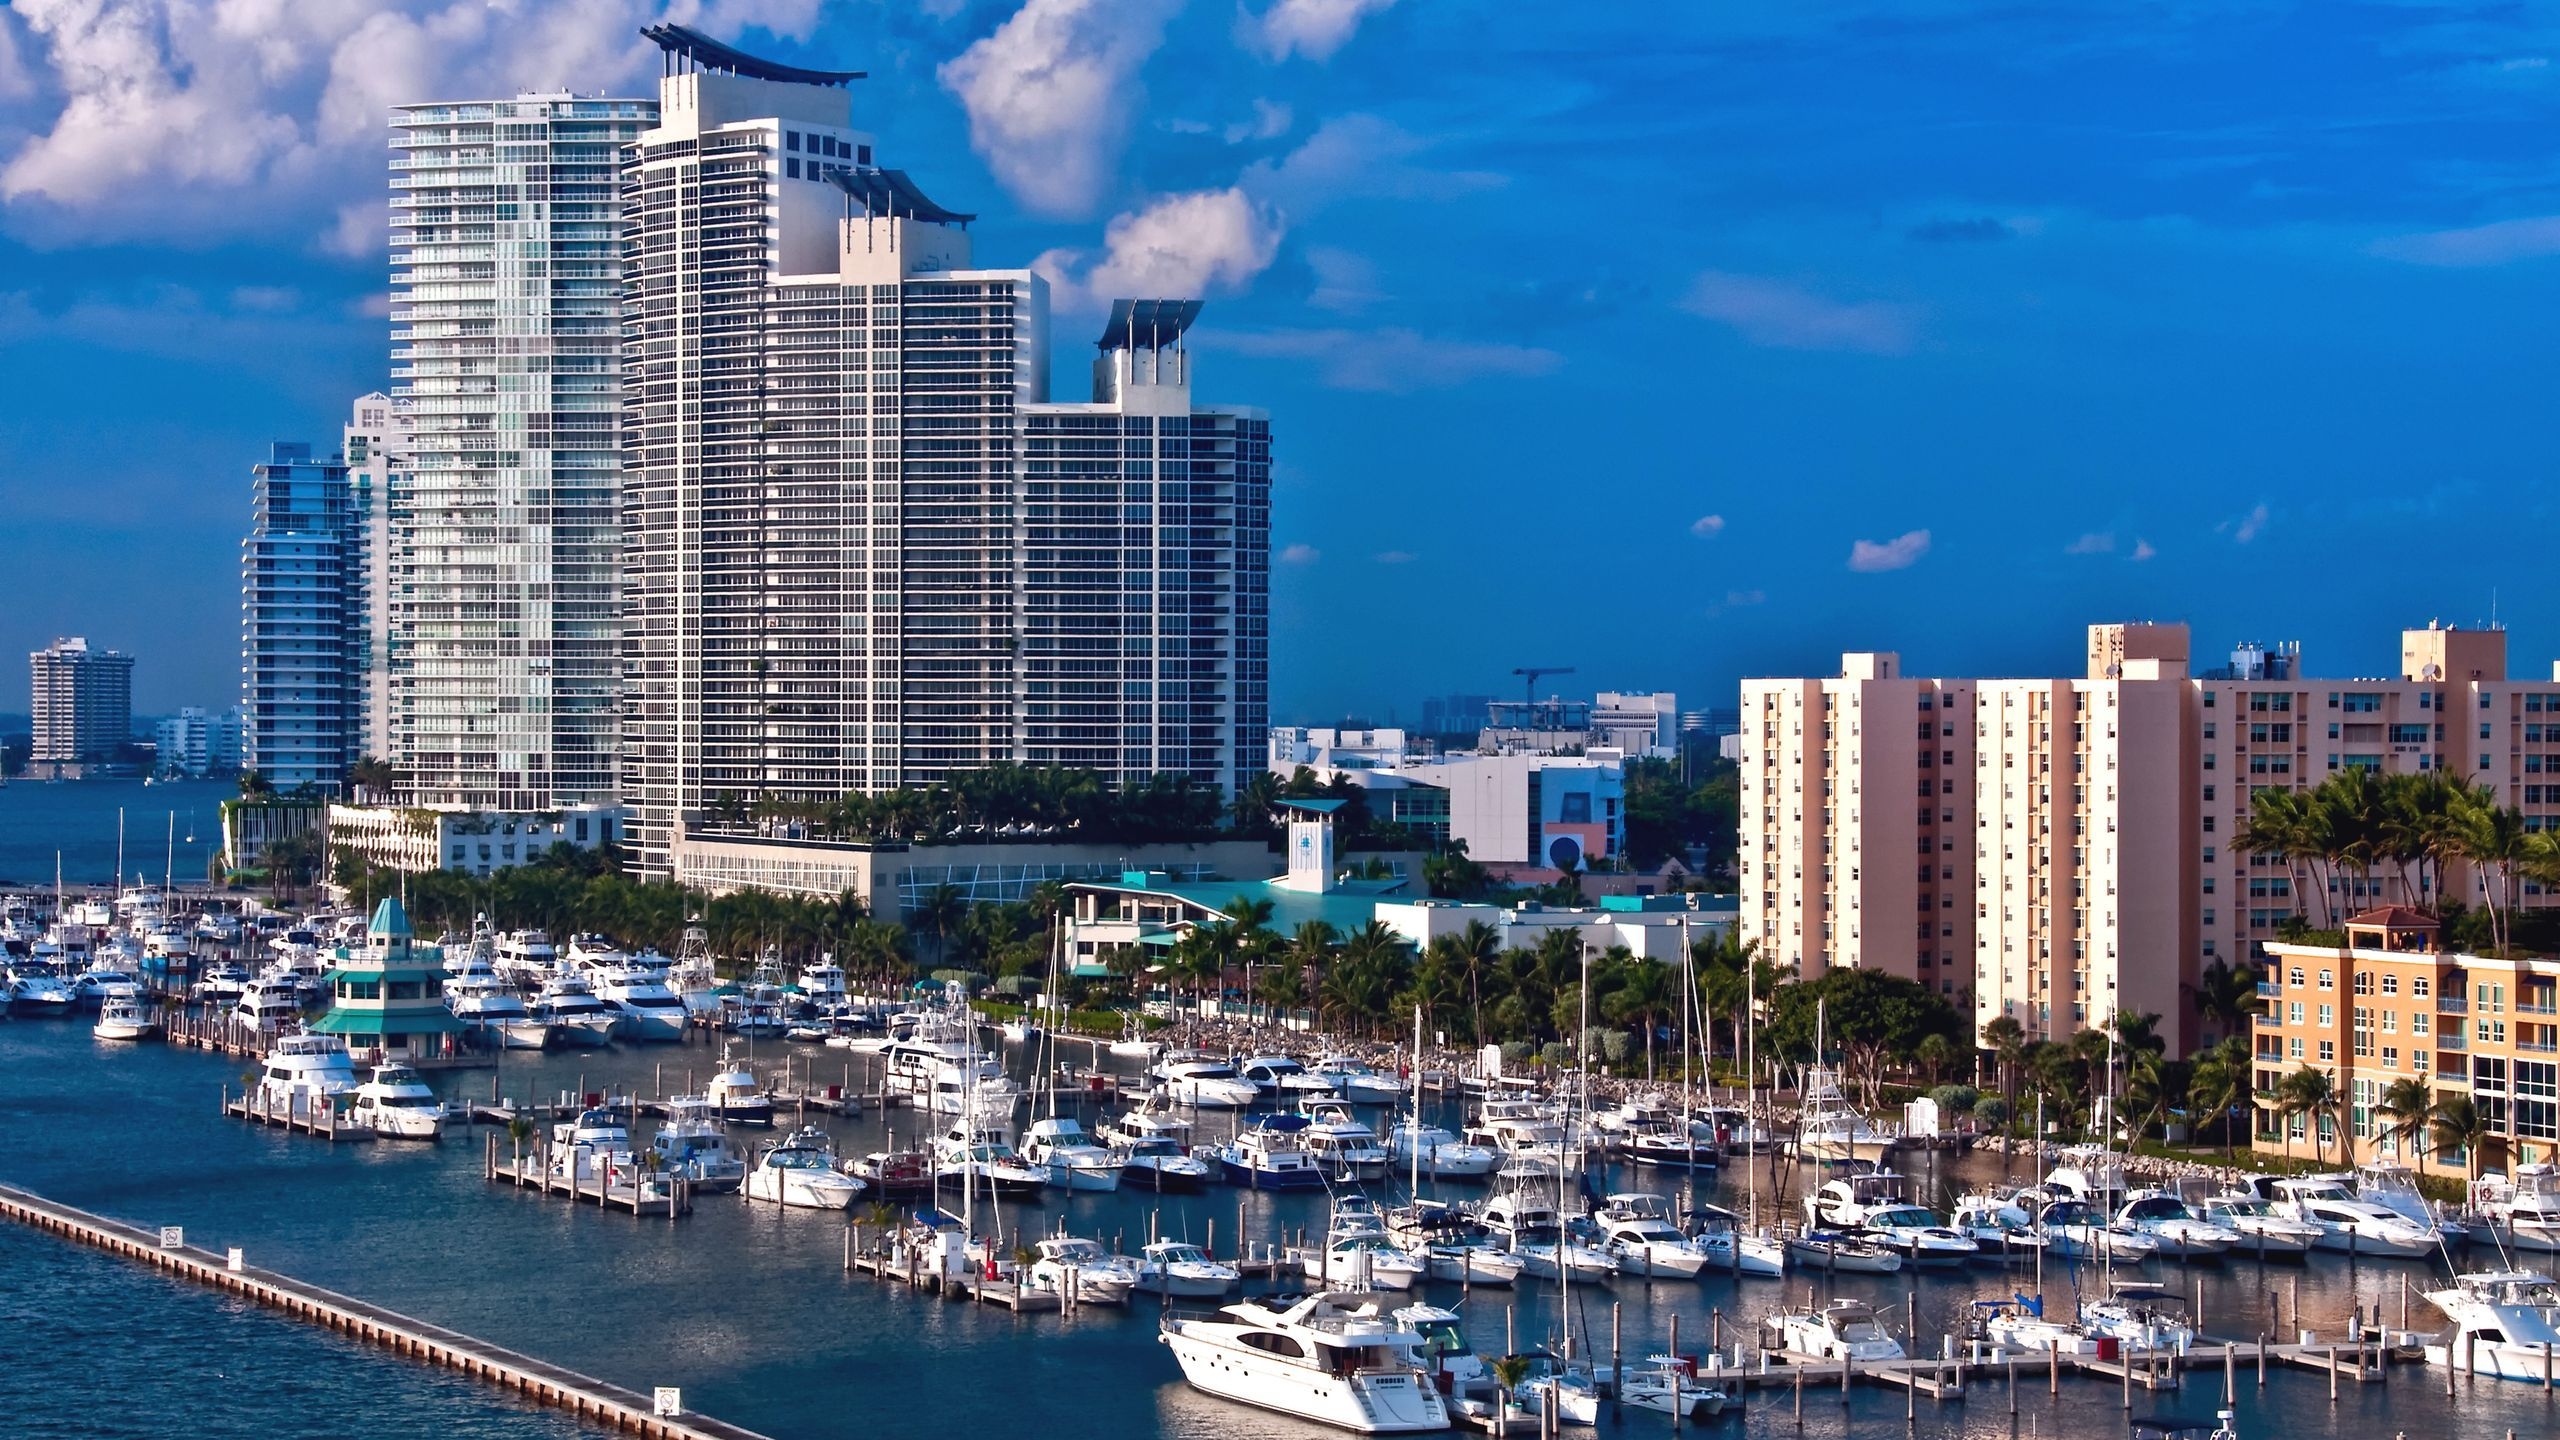 Miami Port for 2560x1440 HDTV resolution